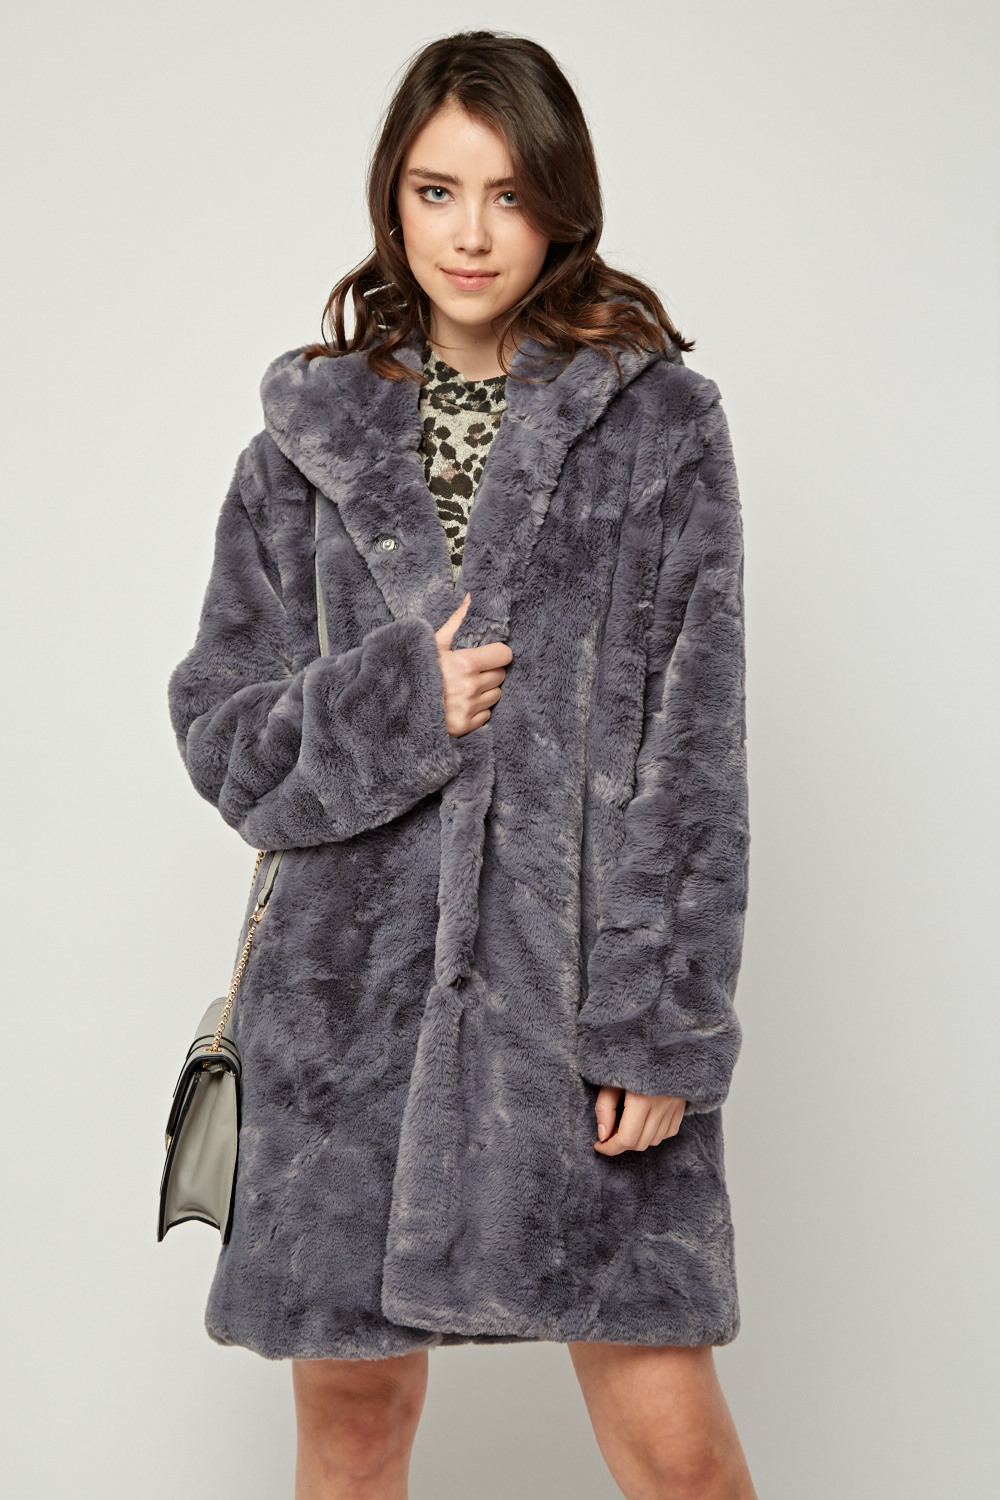 Grey Faux Fur Hooded Coat - Just $50